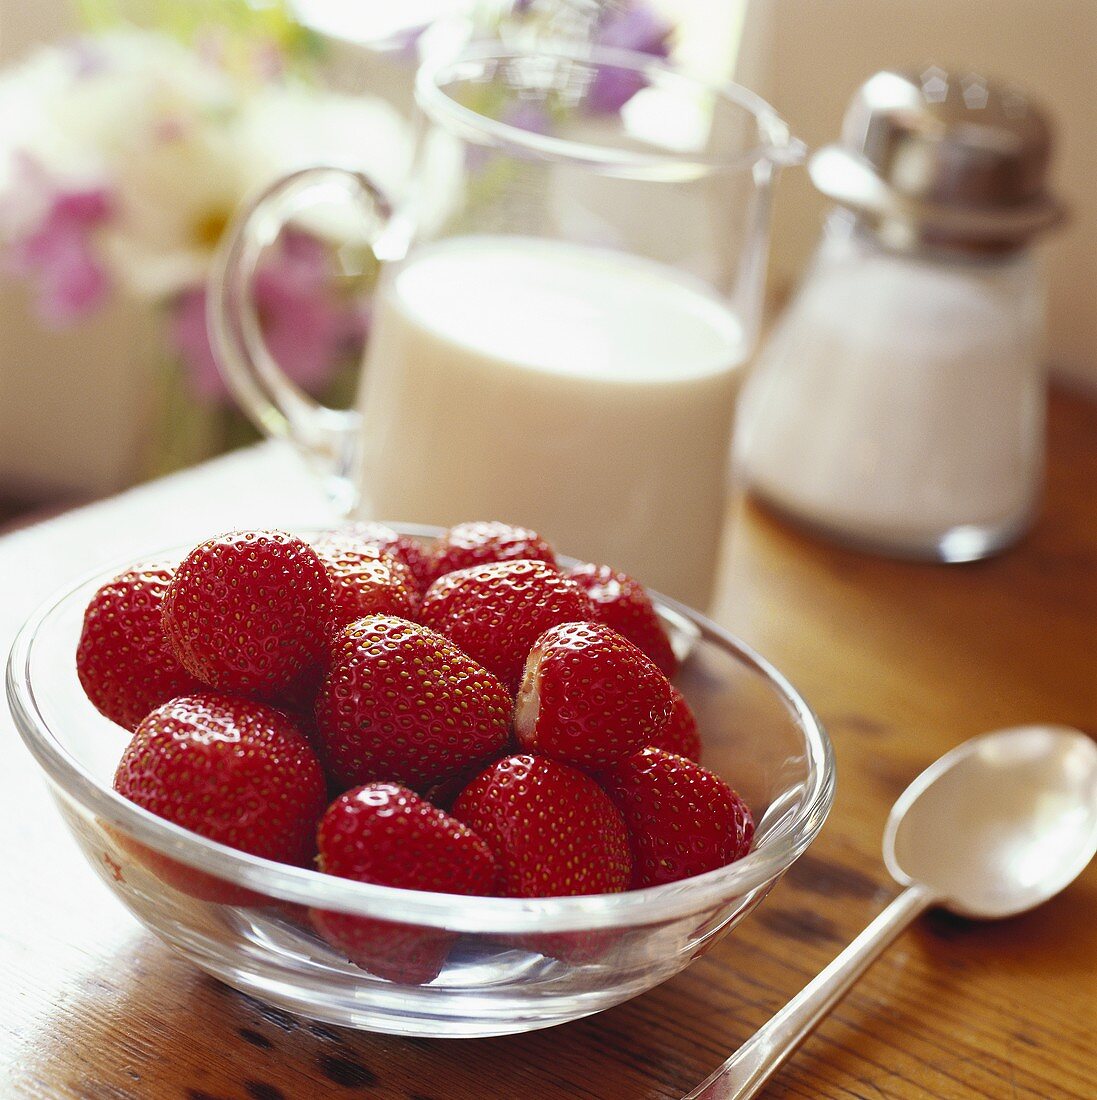 Strawberries in a bowl, jug of cream behind